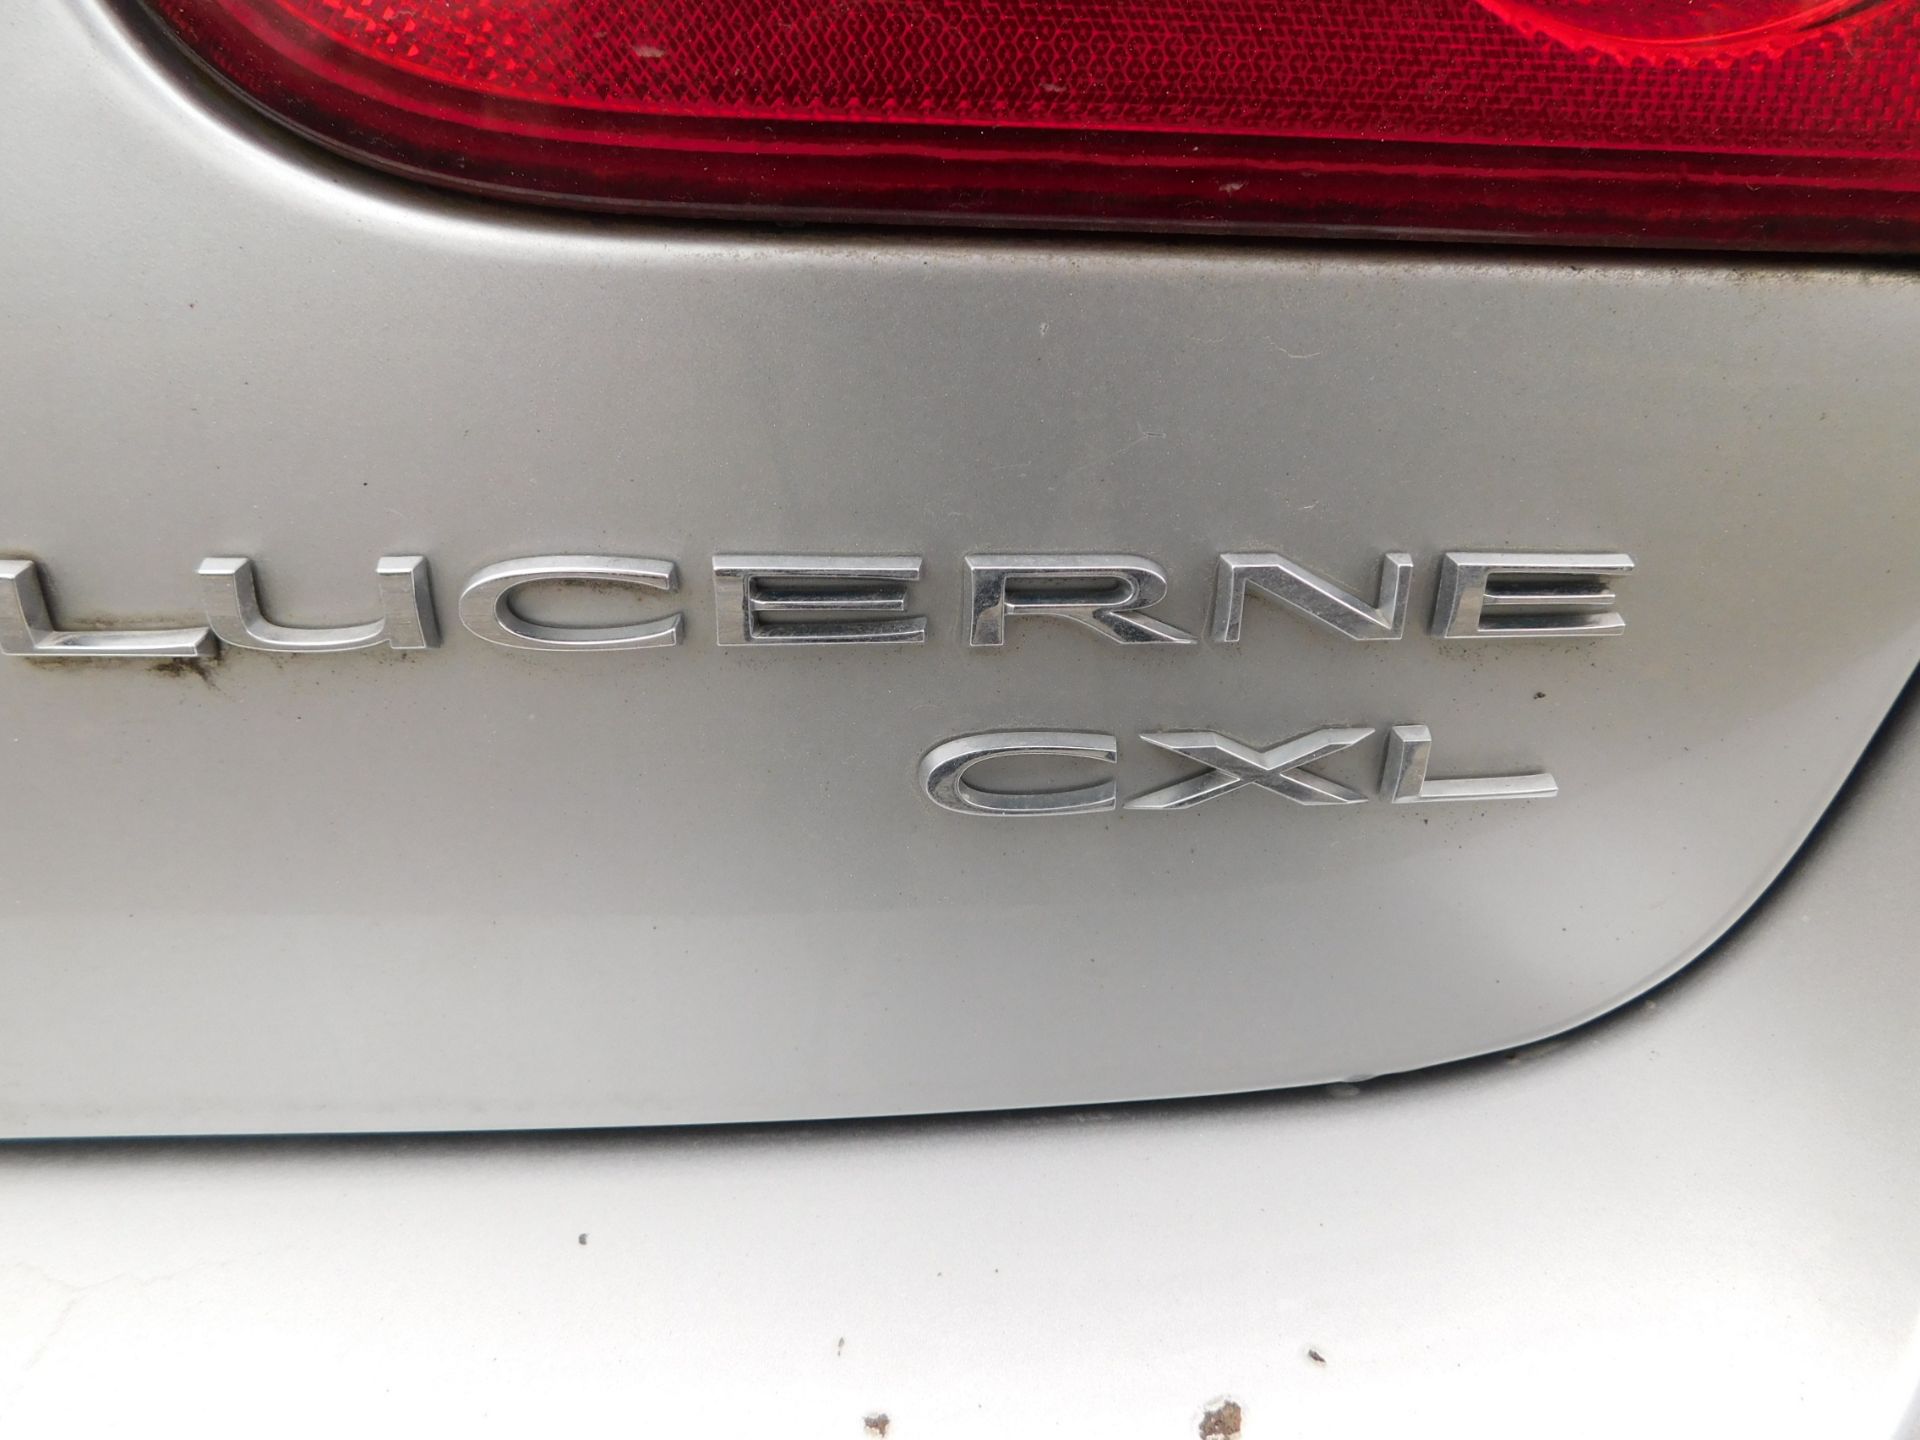 2007 Buick Lucerne CXL 4-Door Sedan, VIN 1G4HD57287U226782, Leather, Heated Seats, Automatic, PW, - Image 15 of 22